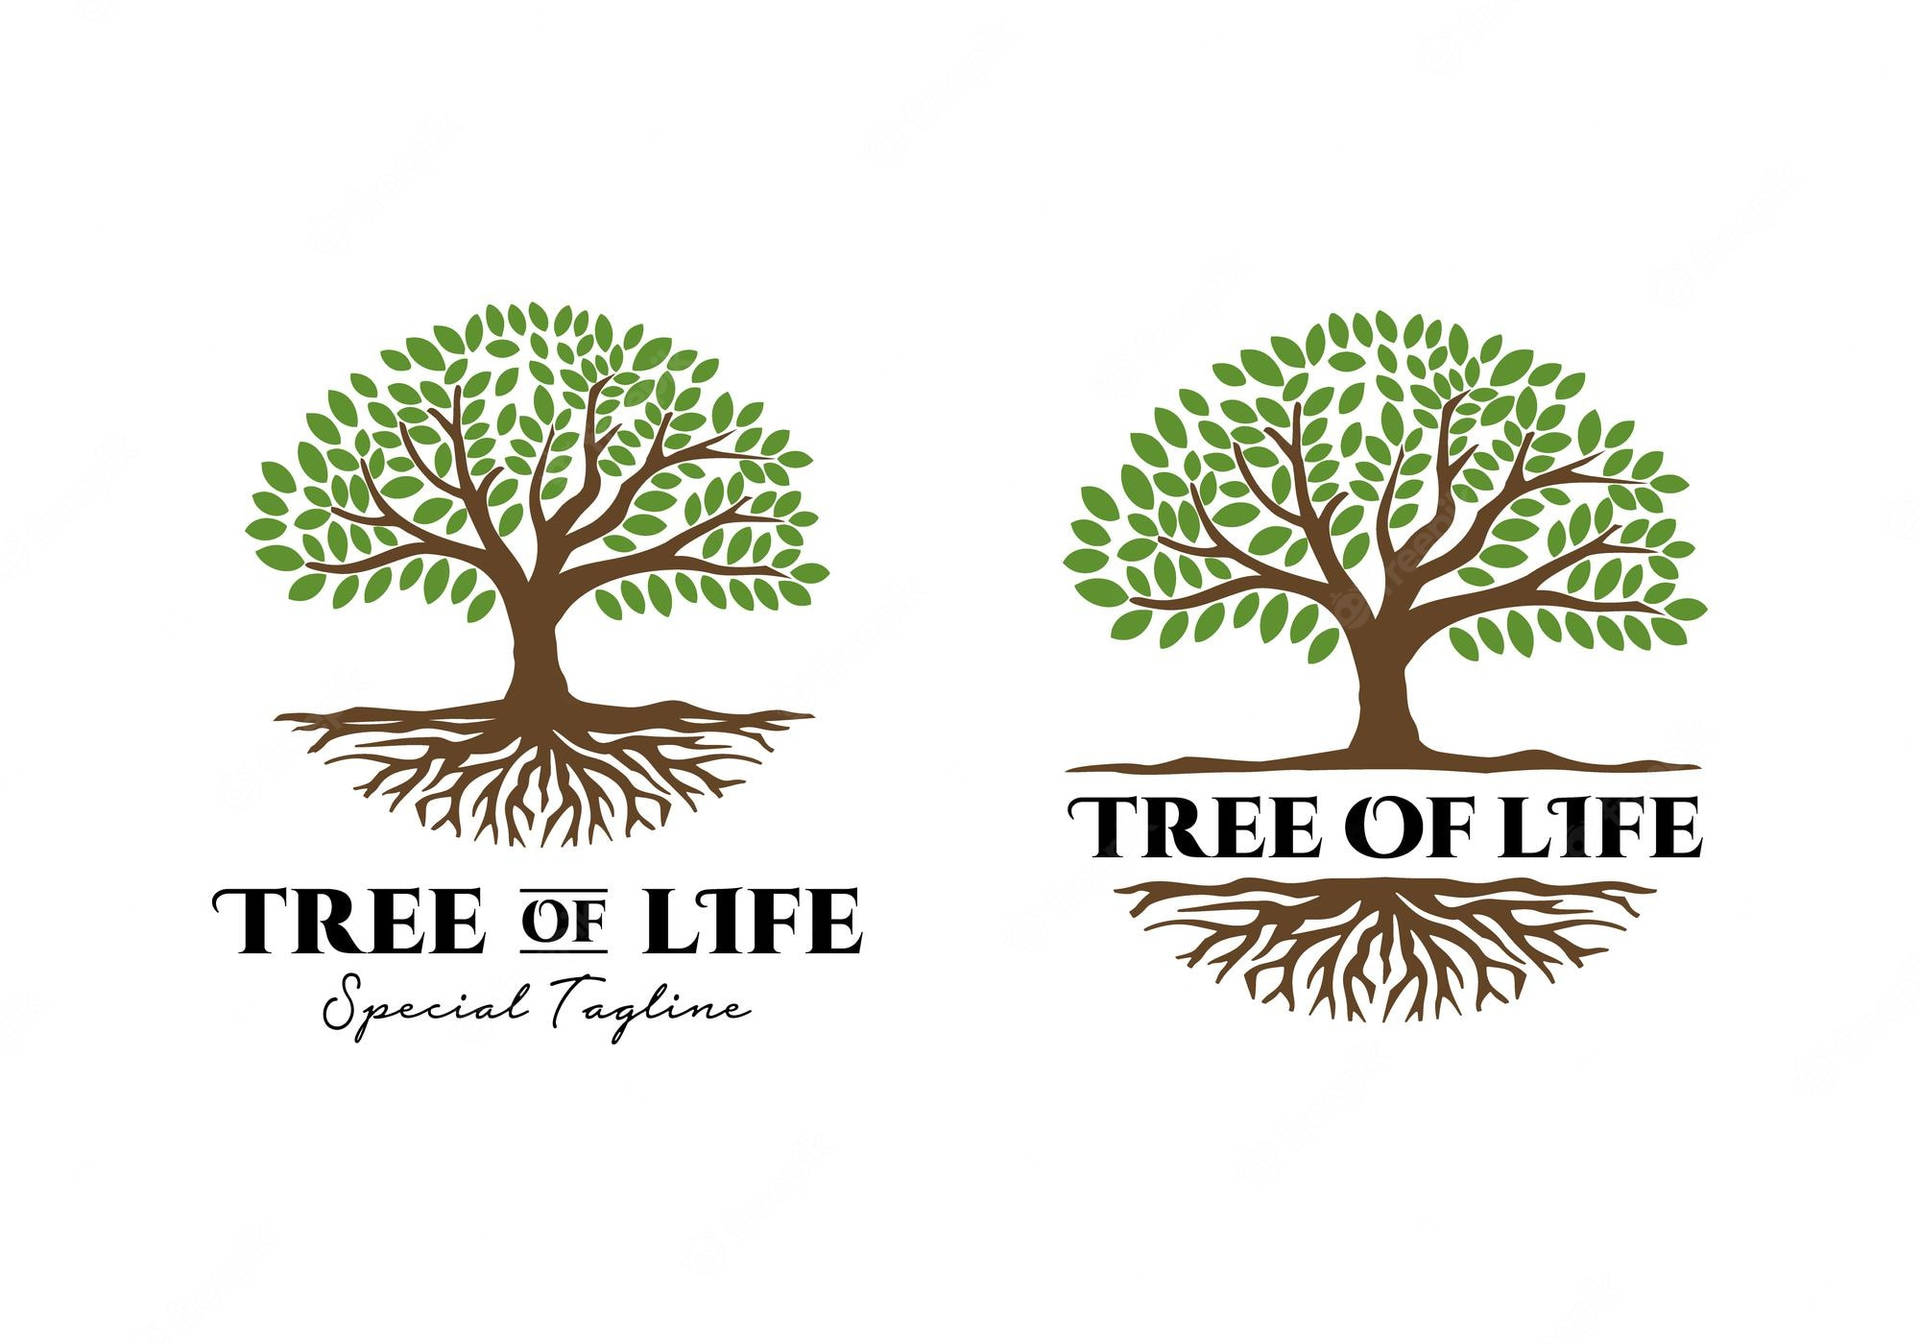 Two Tree Of Life Logos Wallpaper